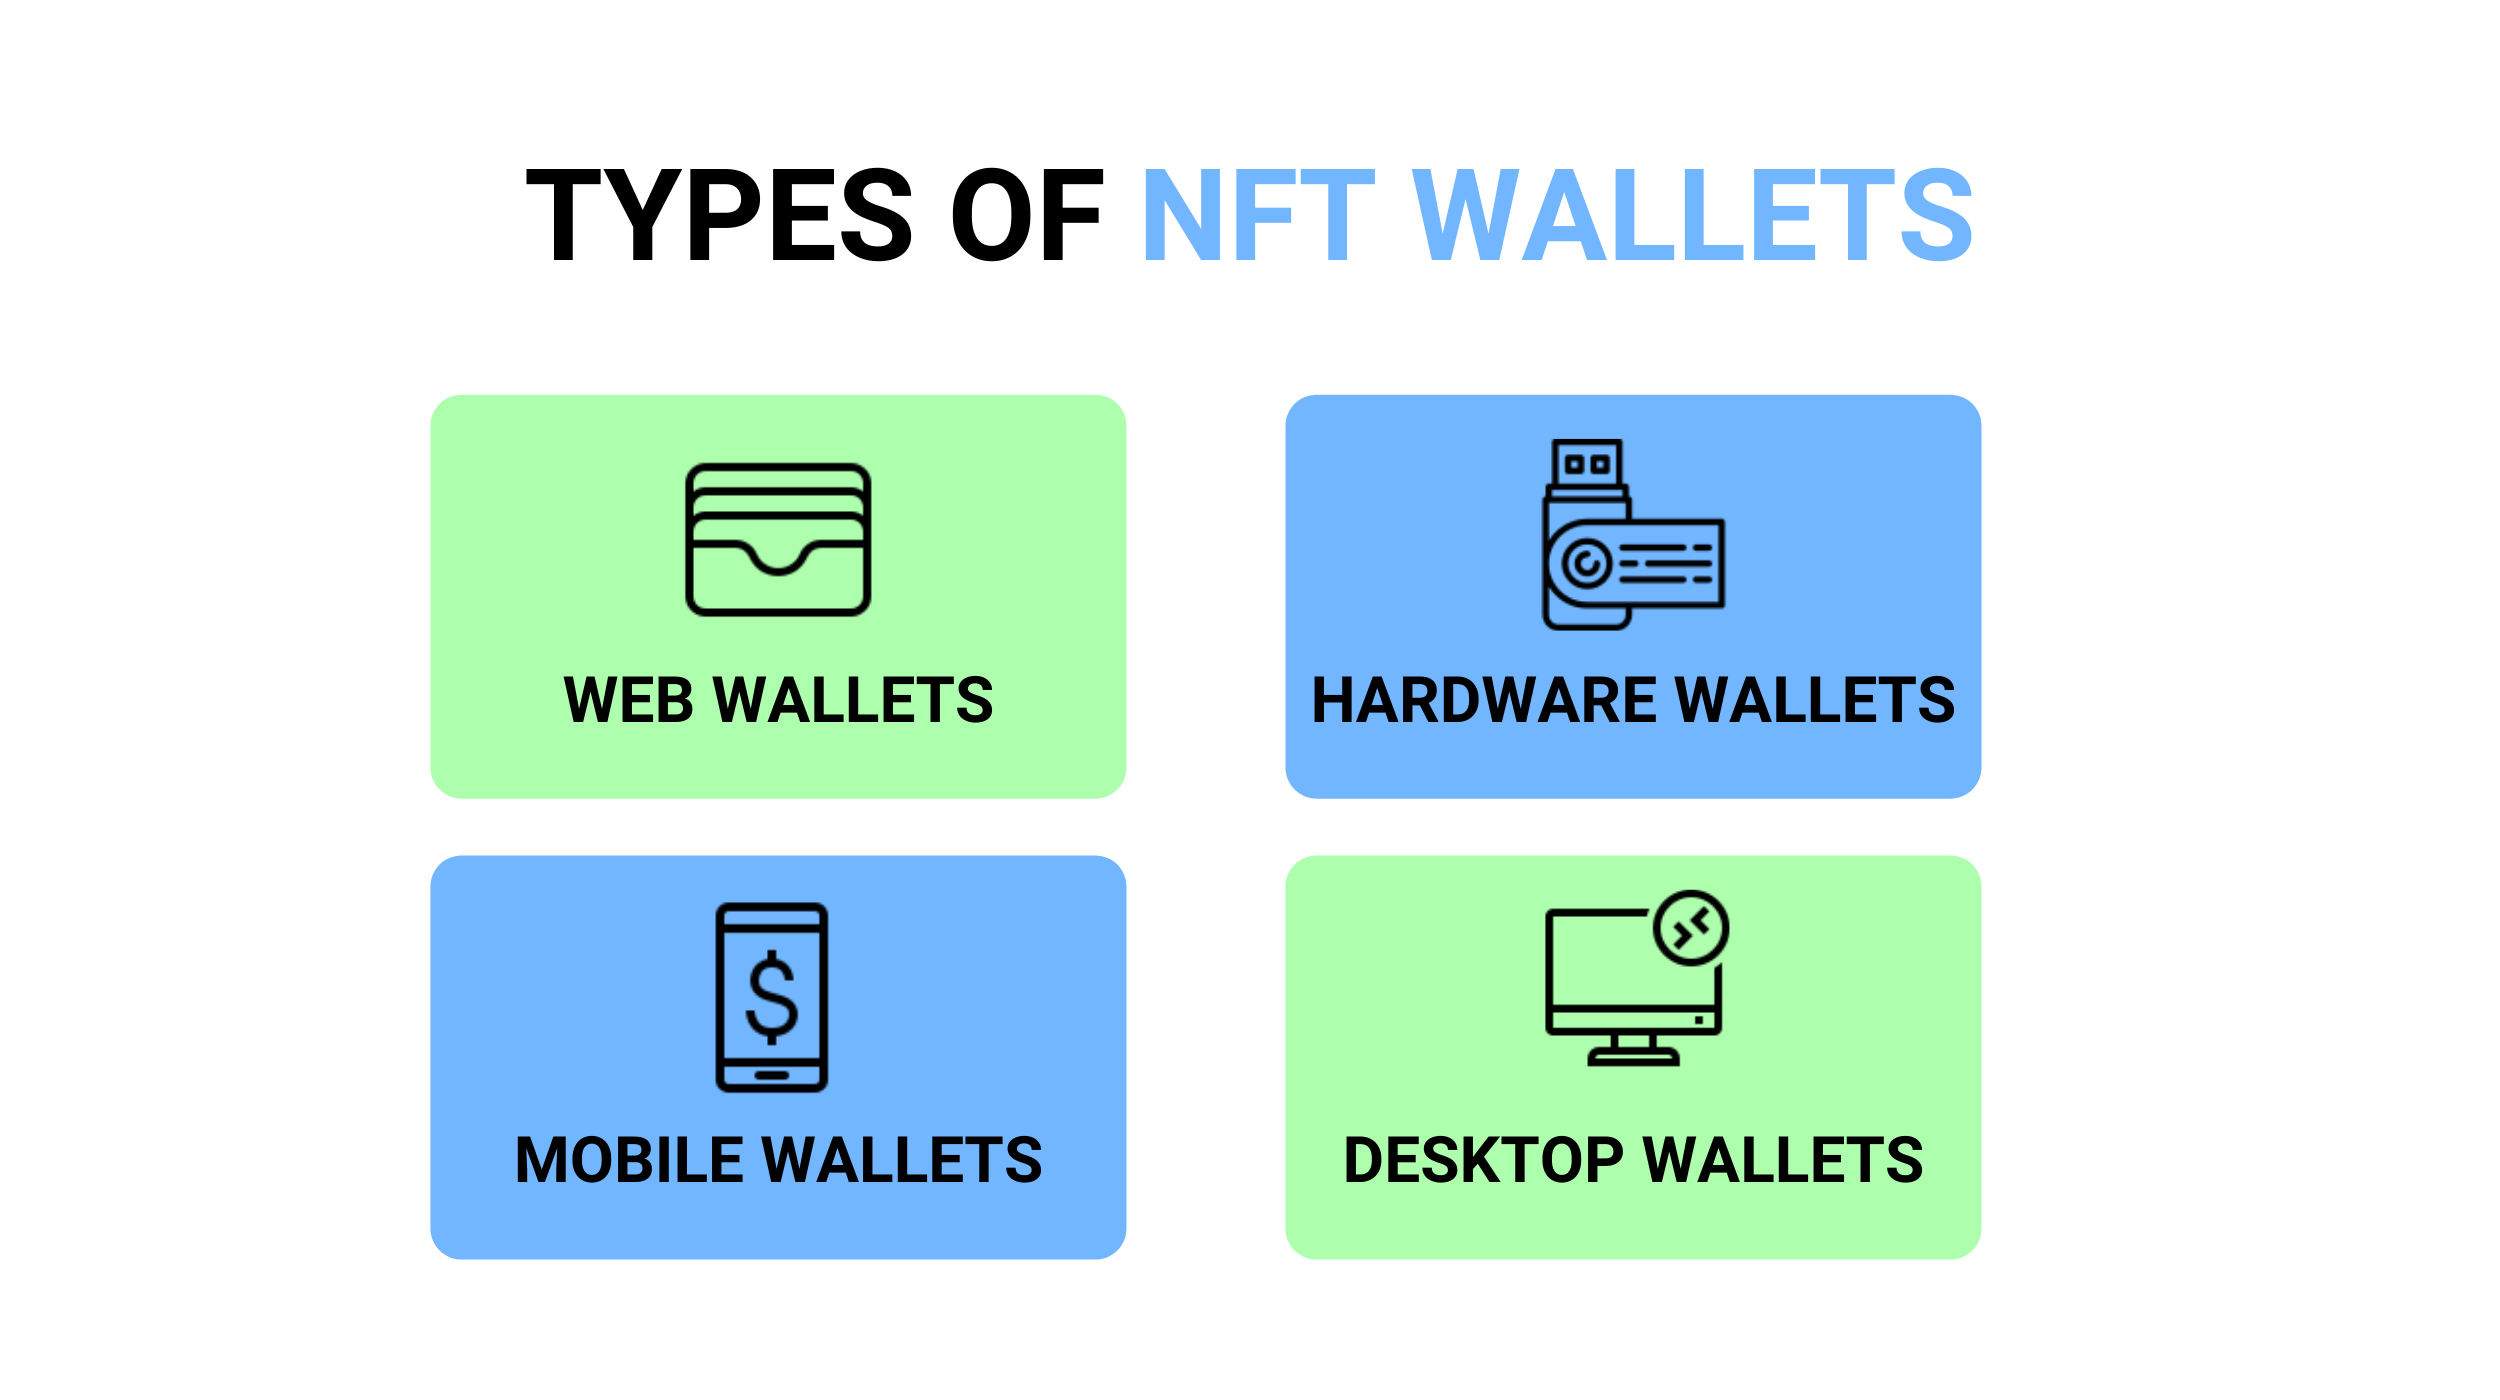 Types of NFT wallets